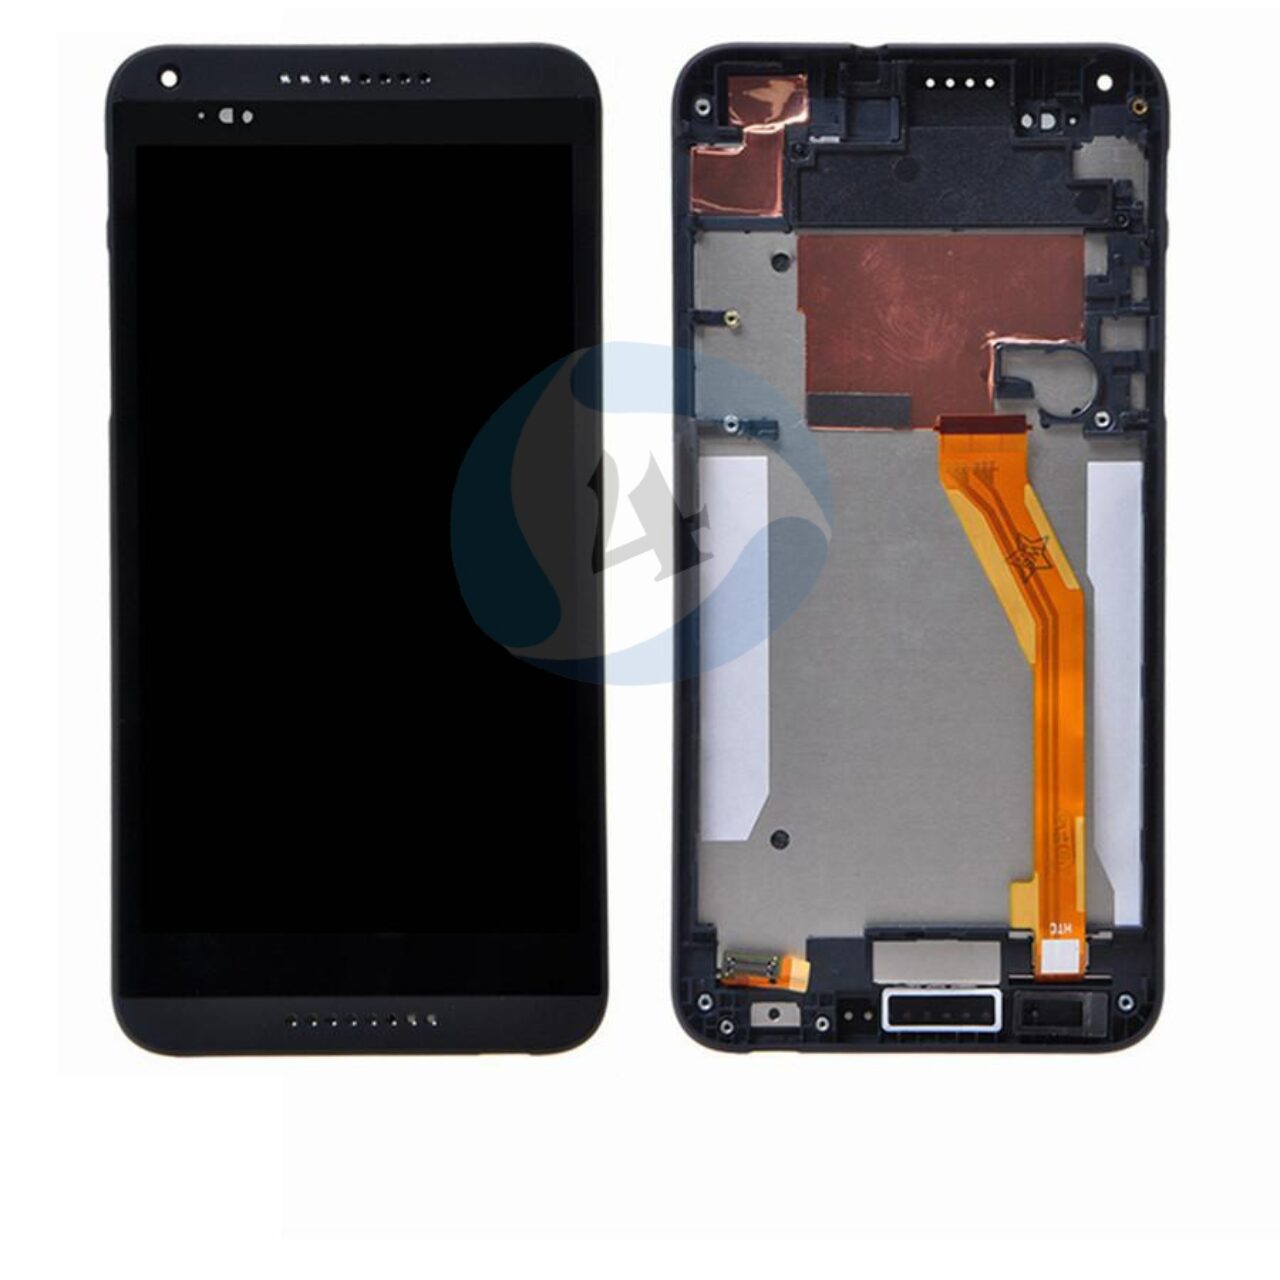 HTC Desire 816 LCD Display Touchscreen Frame Black